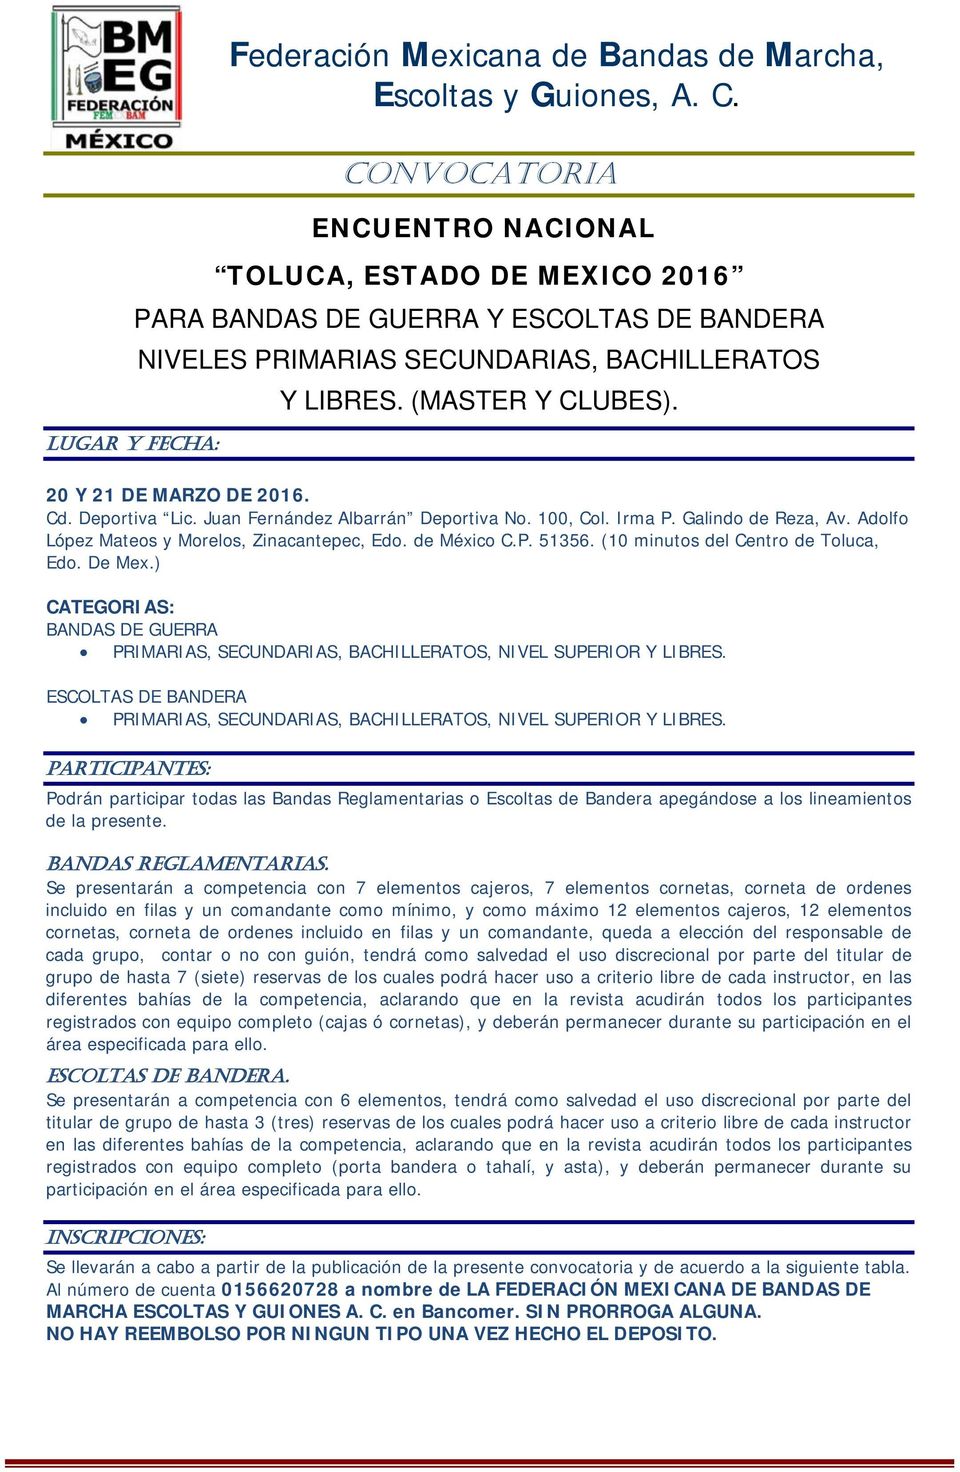 (10 minutos del Centro de Toluca, Edo. De Mex.) CATEGORIAS: BANDAS DE GUERRA PRIMARIAS, SECUNDARIAS, BACHILLERATOS, NIVEL SUPERIOR Y LIBRES.